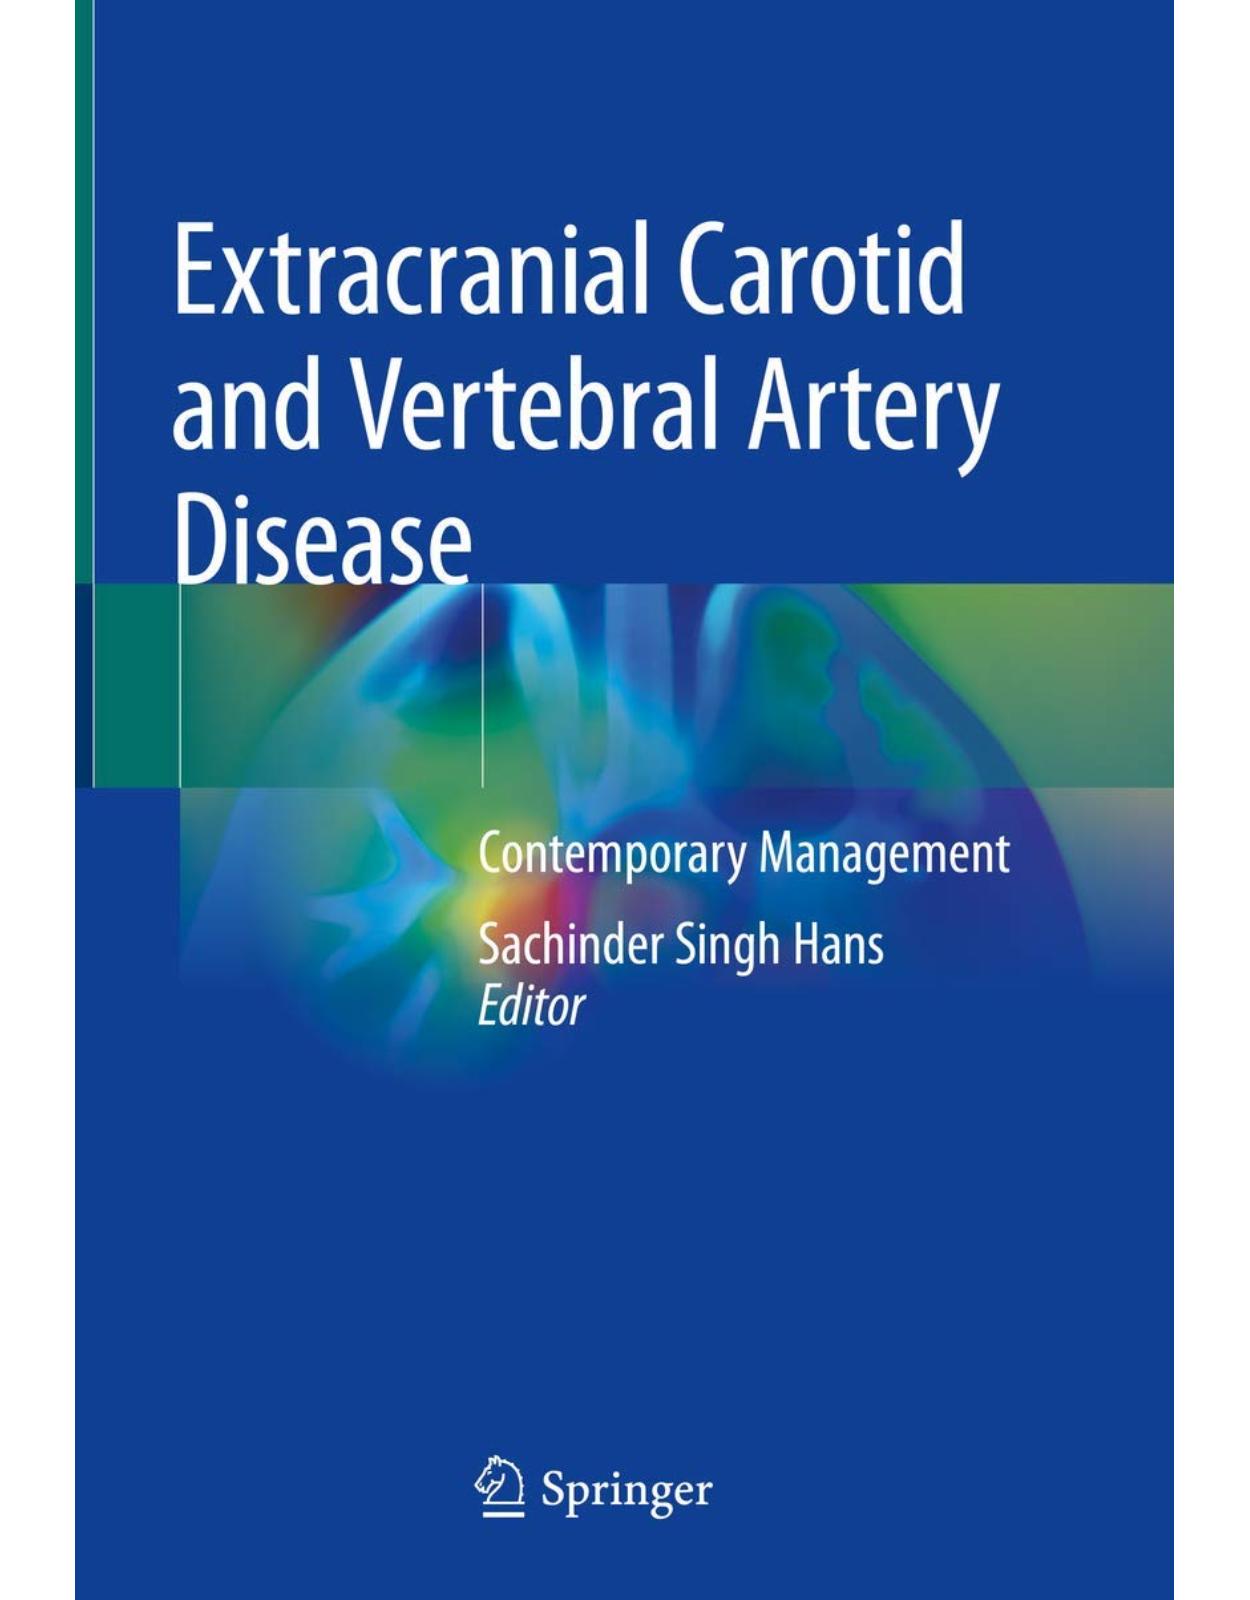 Extracranial Carotid and Vertebral Artery Disease: Contemporary Management